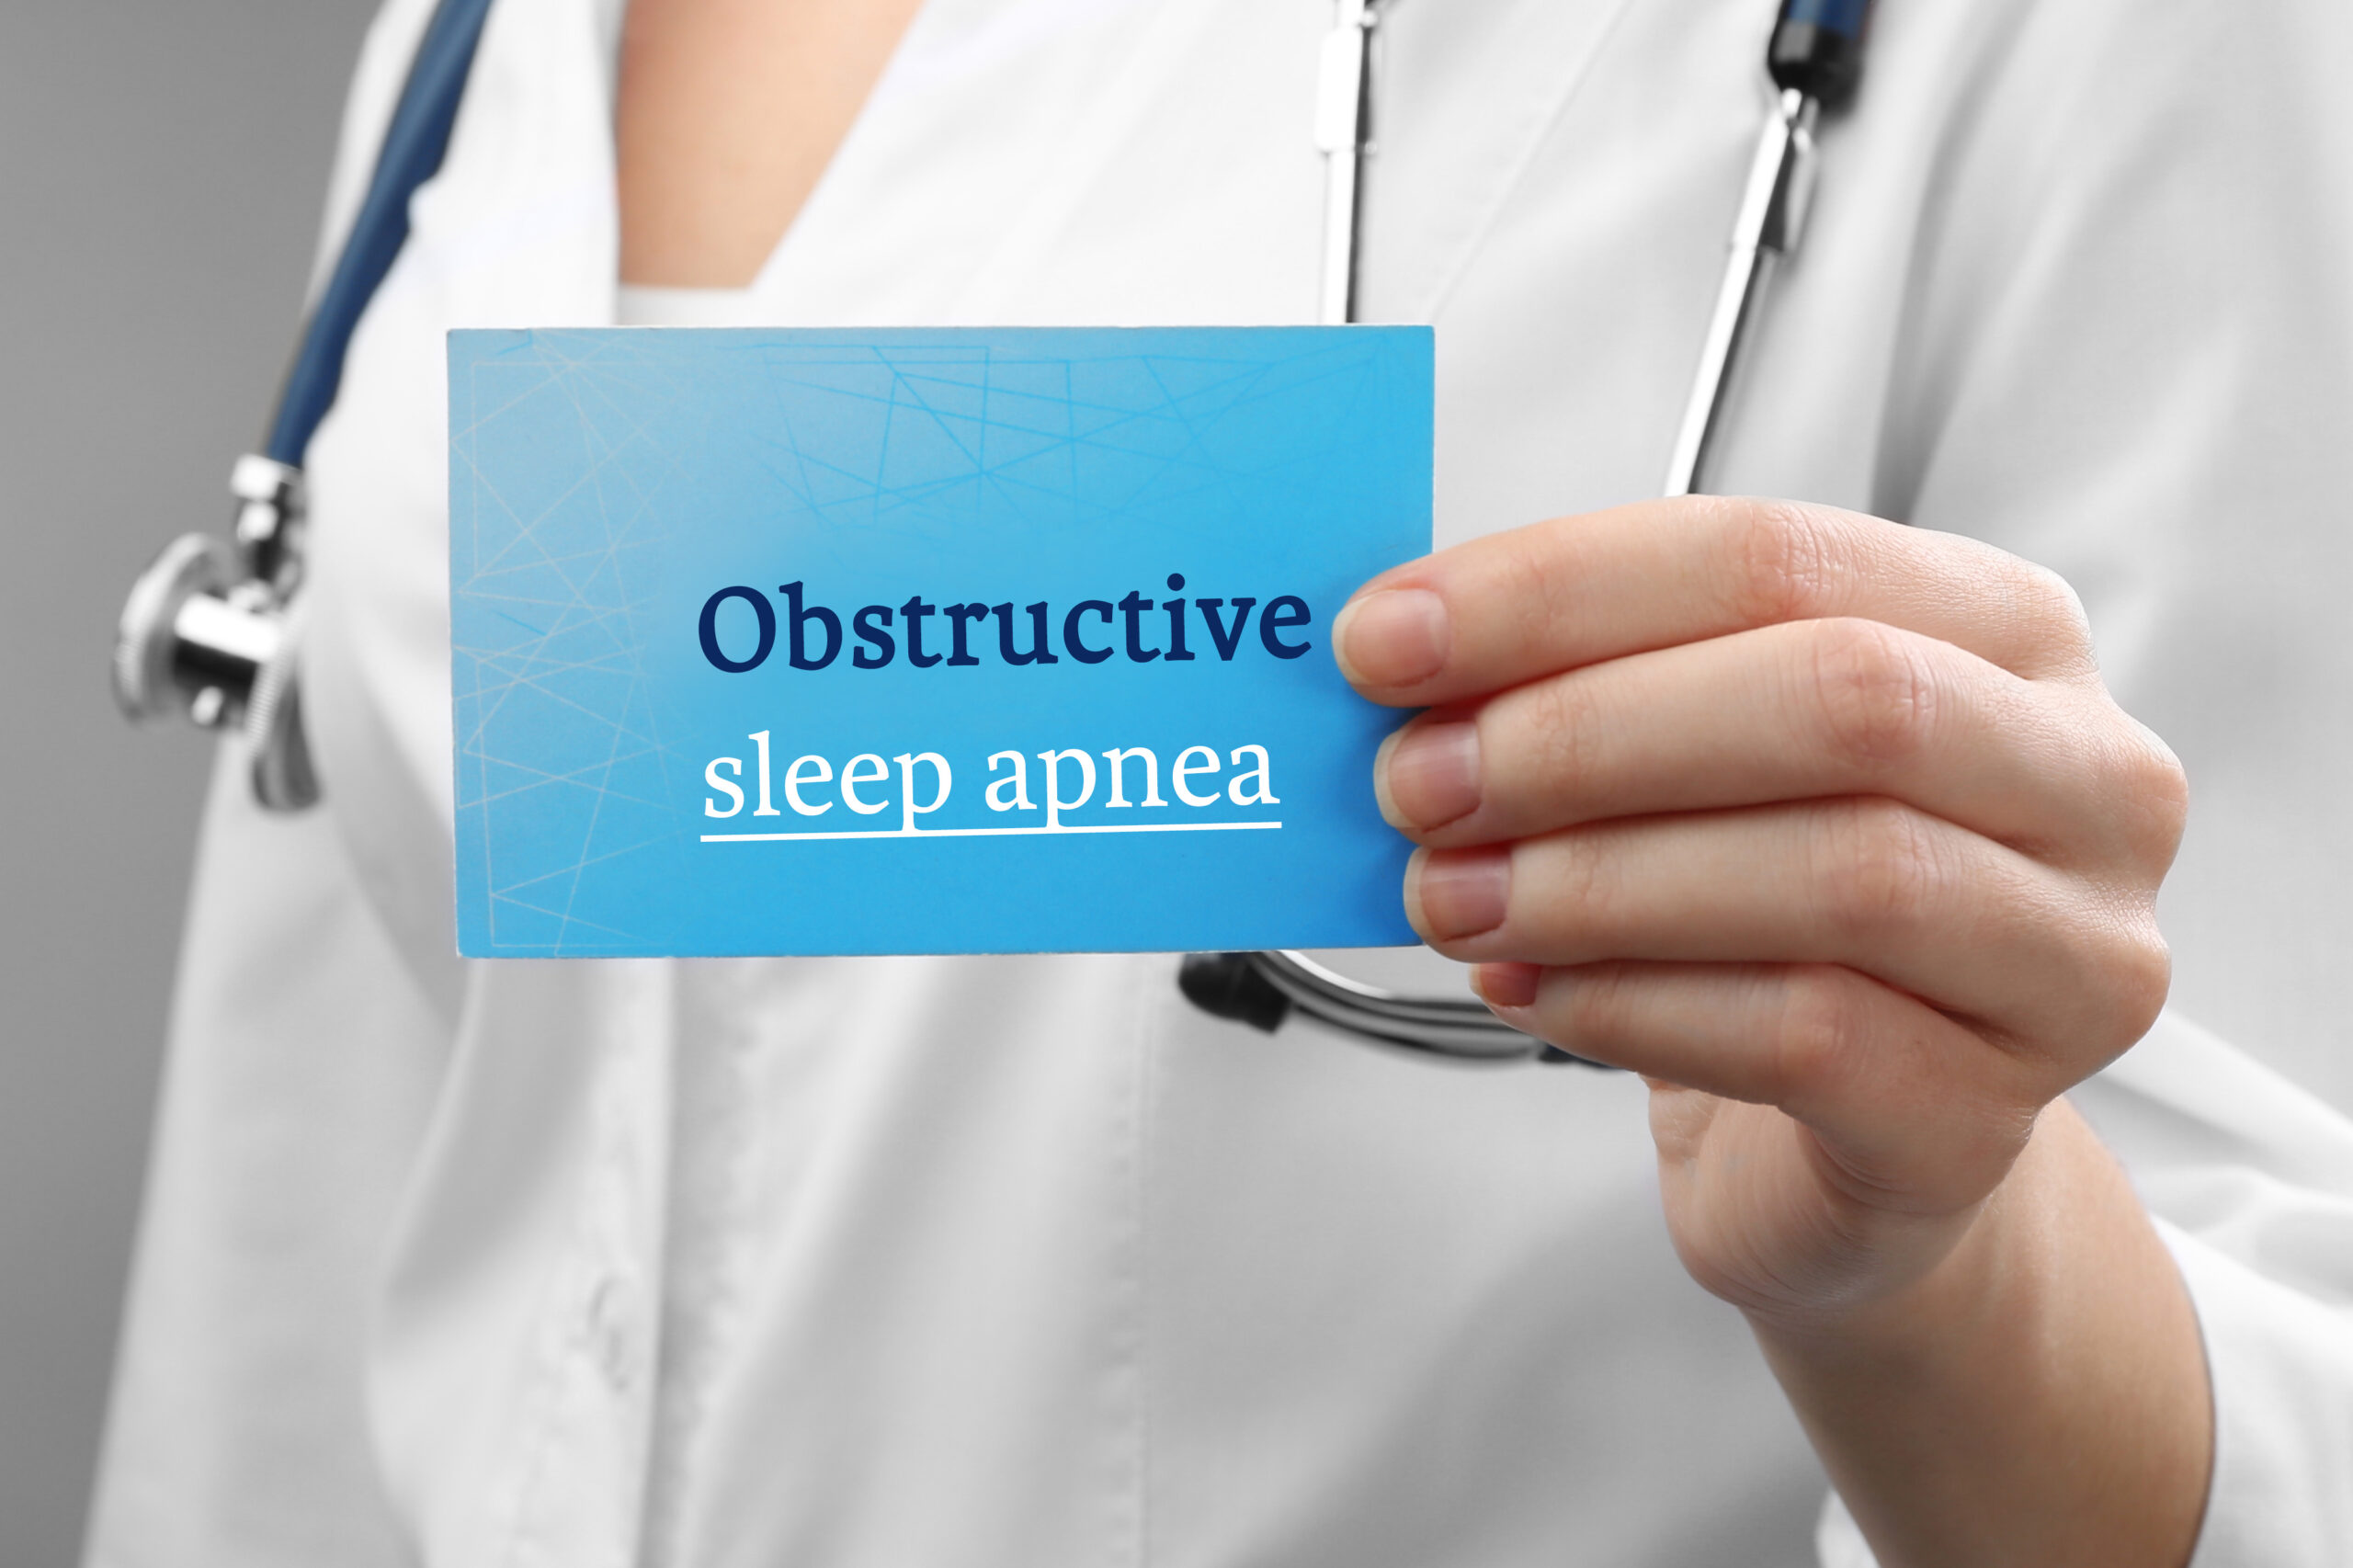 ahava orthodontics obstructive sleep apnea treatment in fort worth